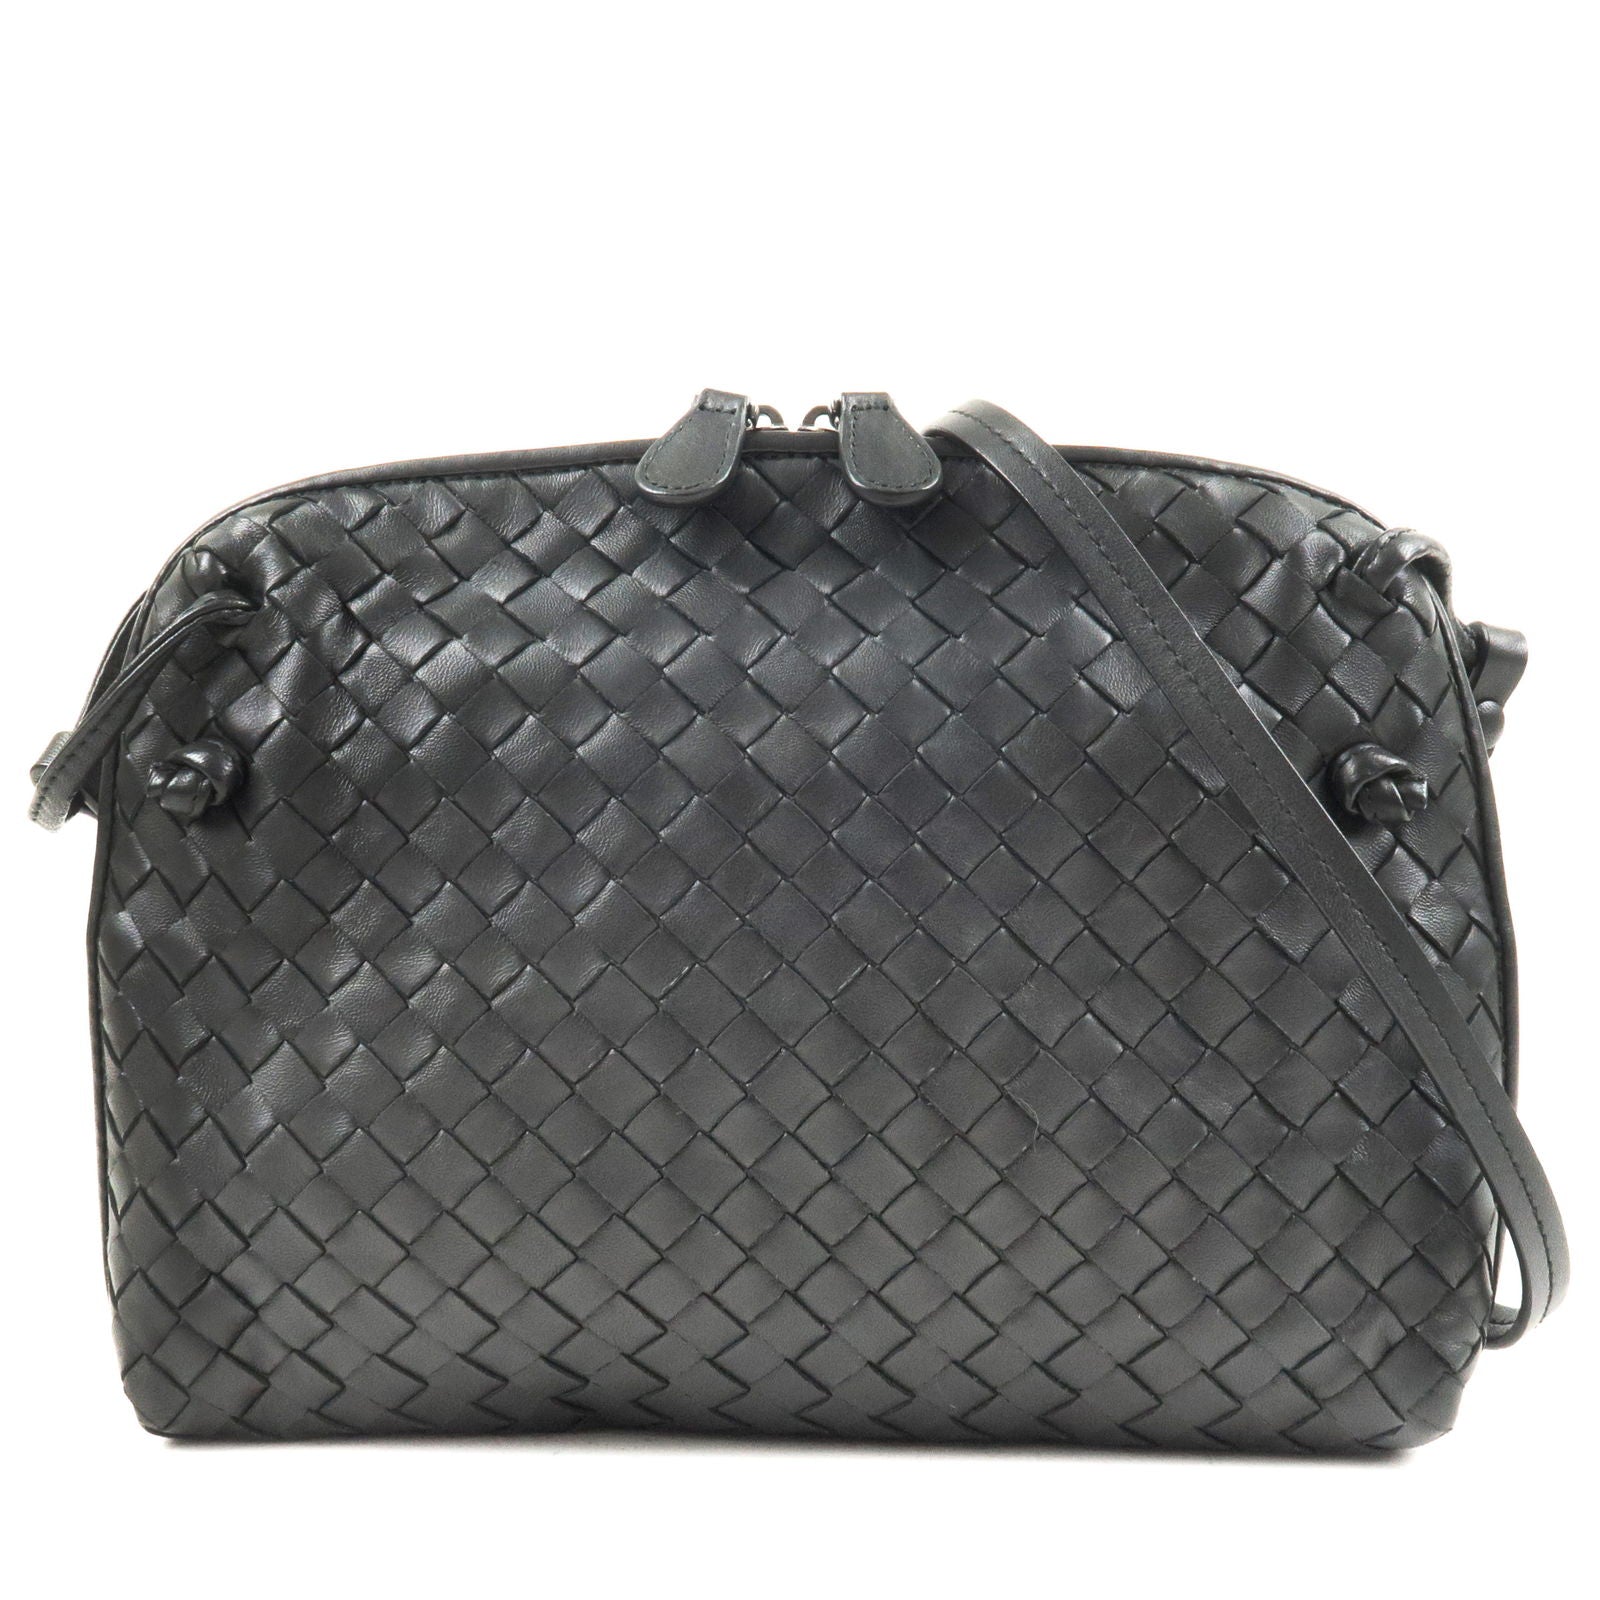 Bottega Veneta Beige Intrecciato Leather Nodini Crossbody Bag